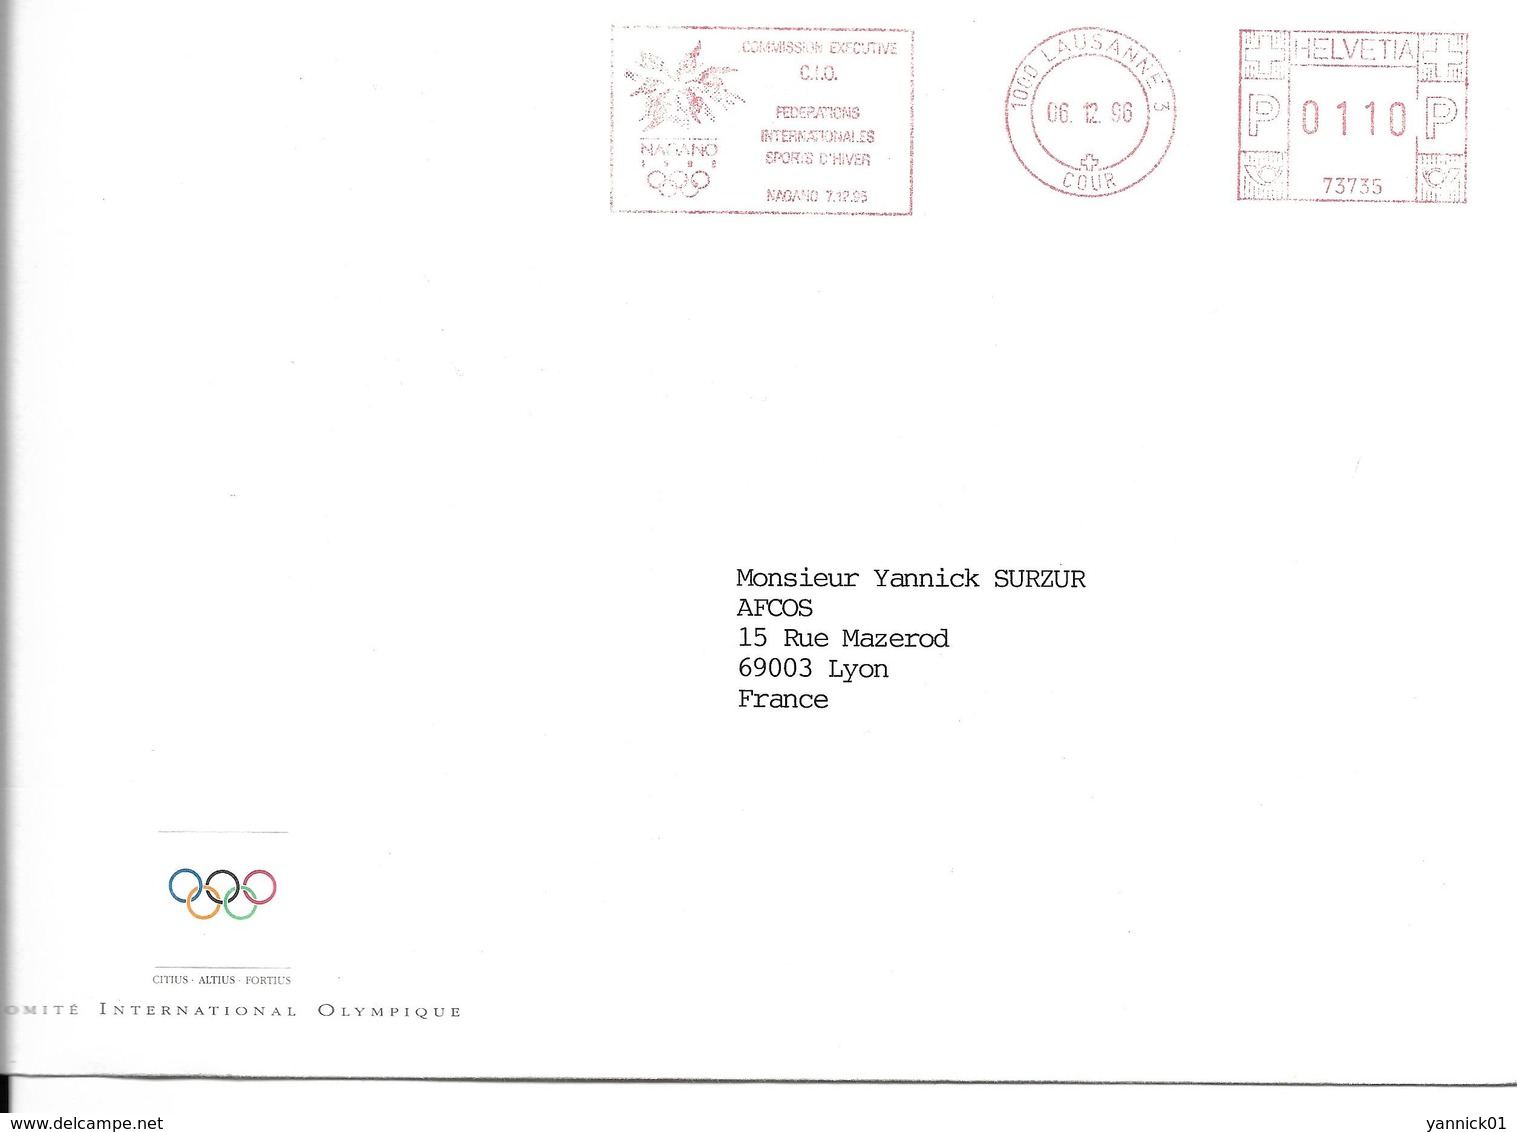 JEUX OLYMPIQUES HIVER - OLYMPICS WINTER GAMES NAGANO 1998 - CIO COMMISION EXECUTIVE - Invierno 1998: Nagano